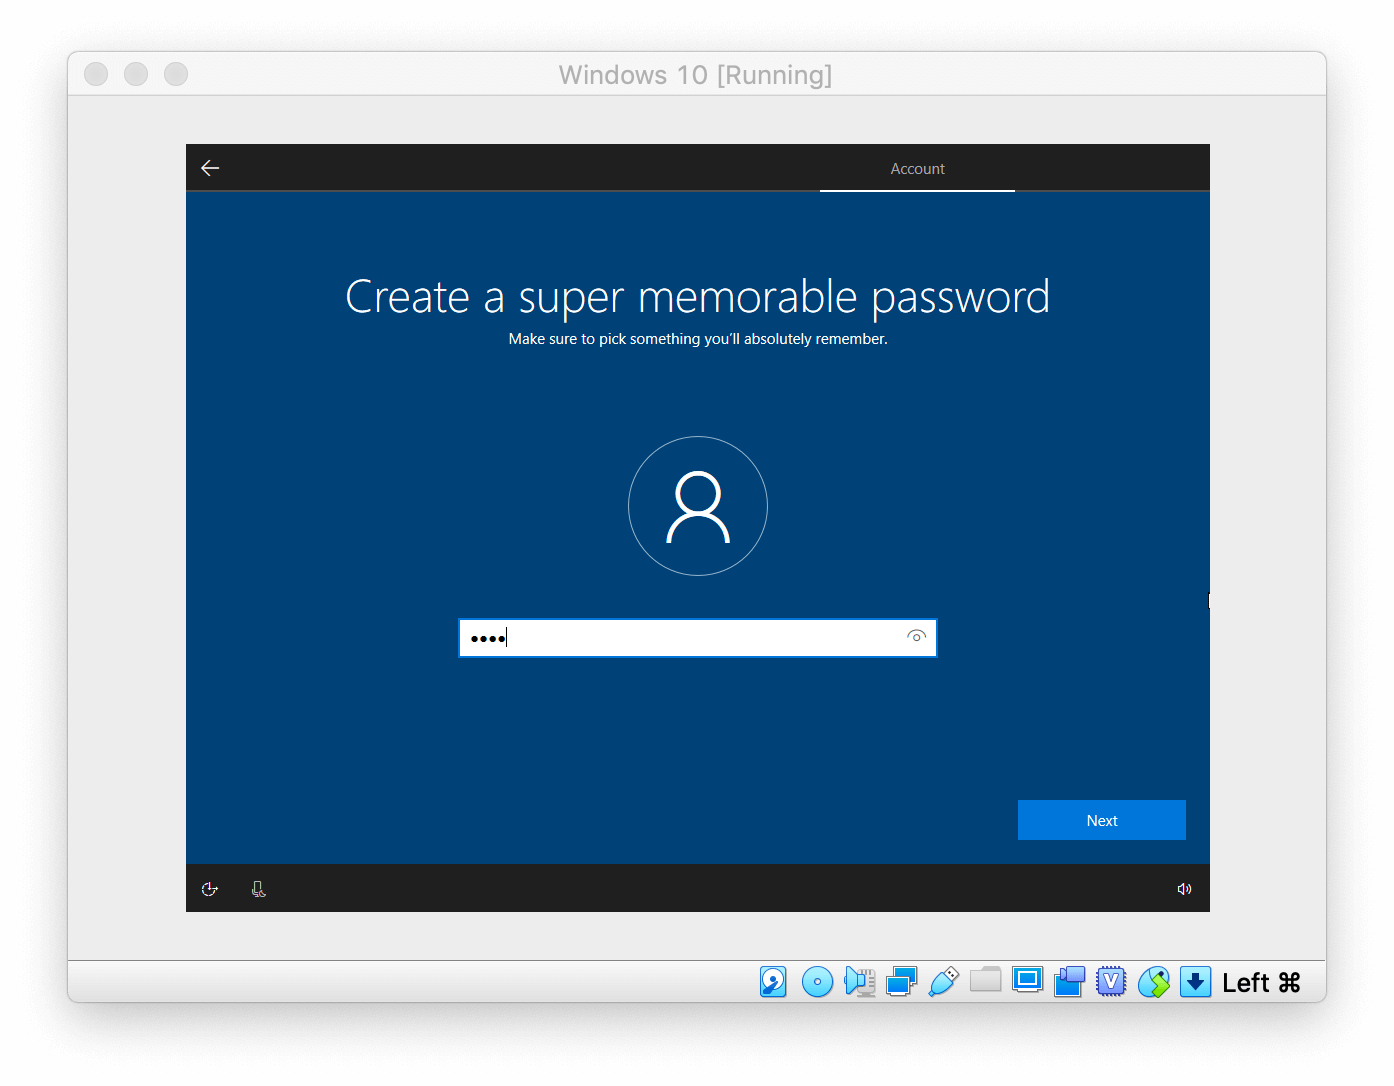 Windows Setup asking to create password for machine